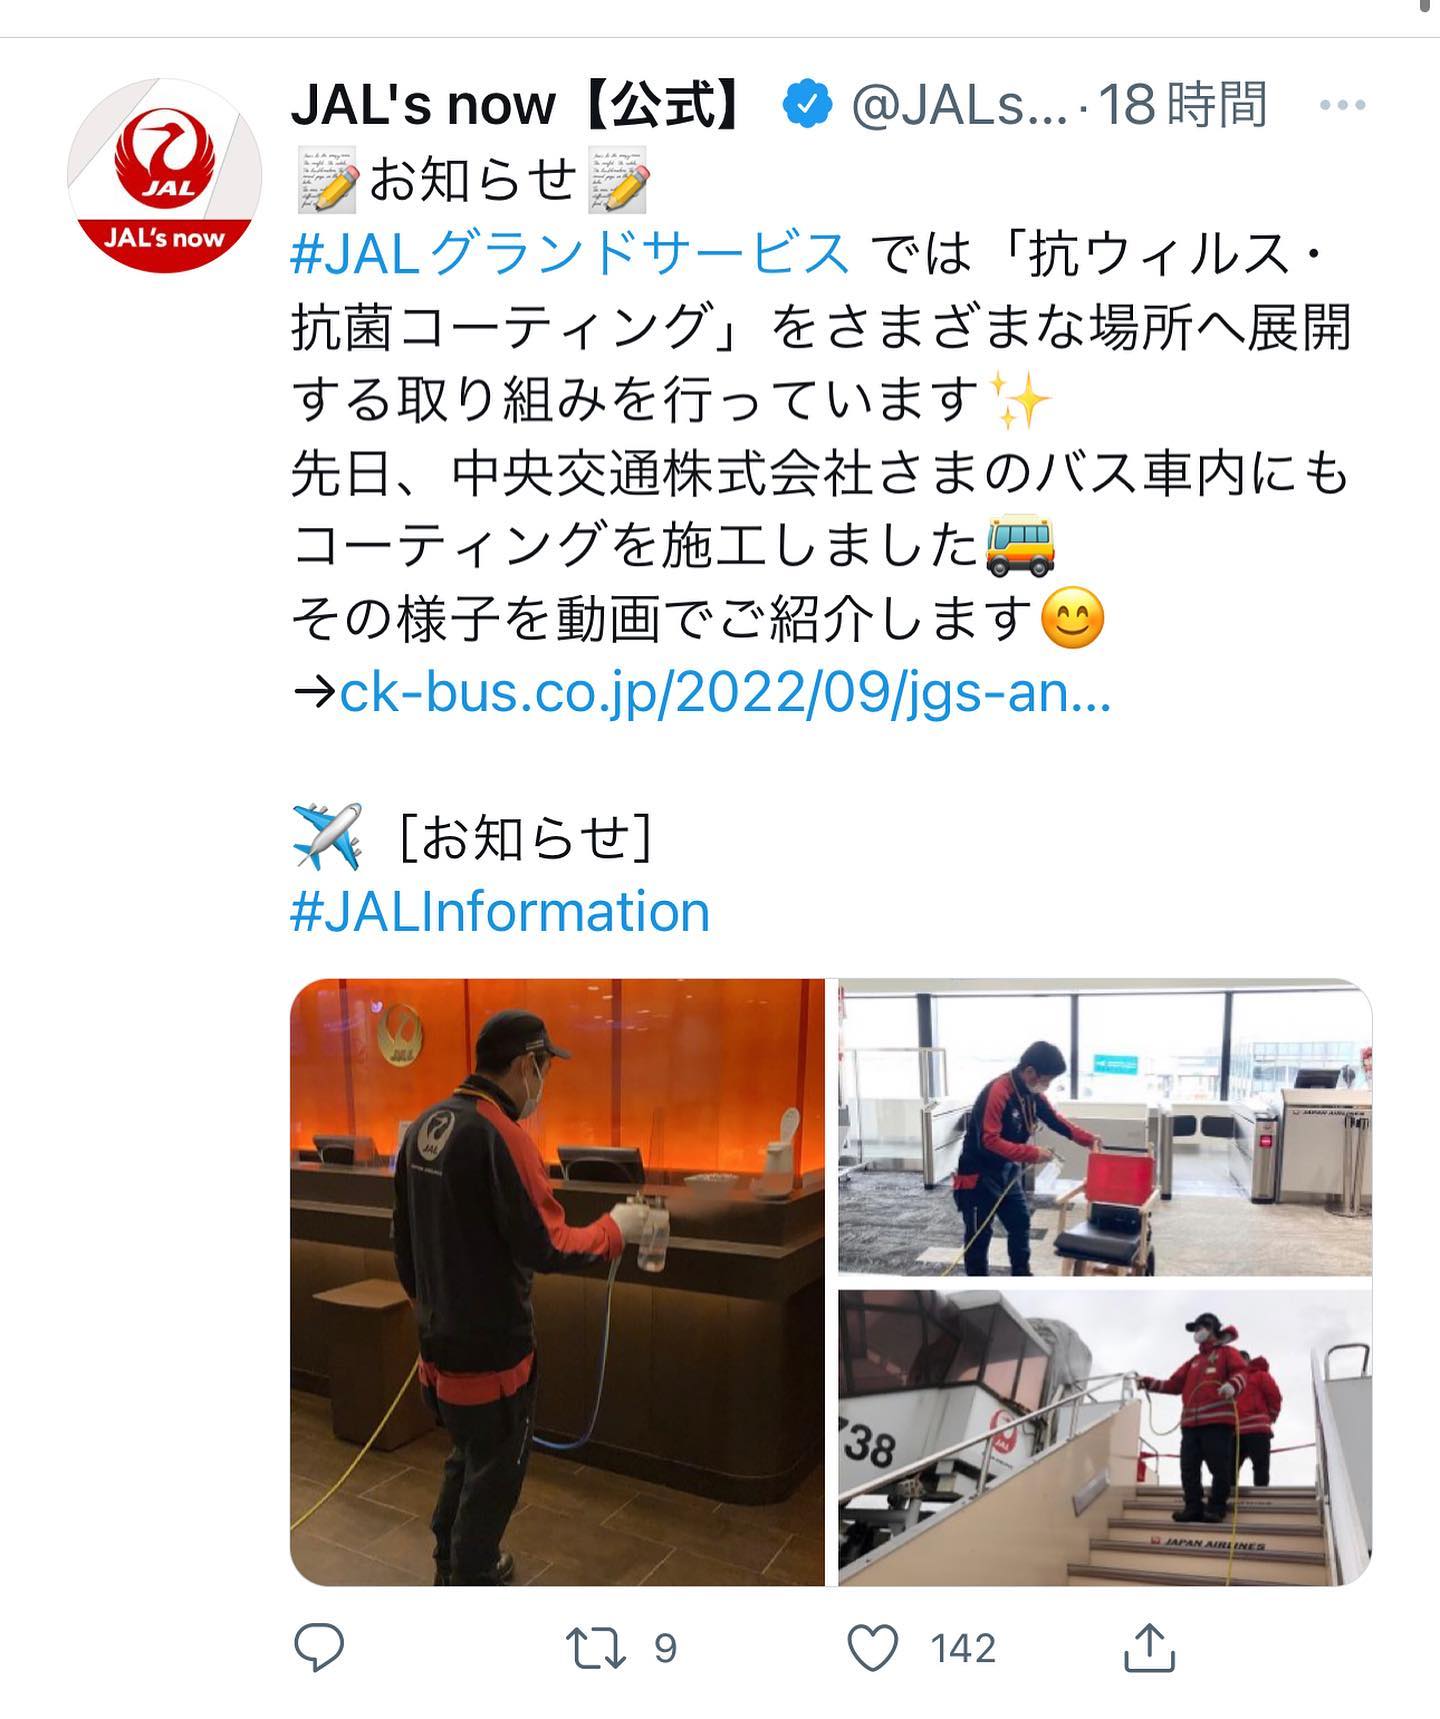 JAL(日本航空)の公式twitter「JAL’s now」に弊社の抗ウィルス•抗菌コーティング施工🚌の記事のリンクを投稿して頂きました✈️
是非ご覧下さい✨